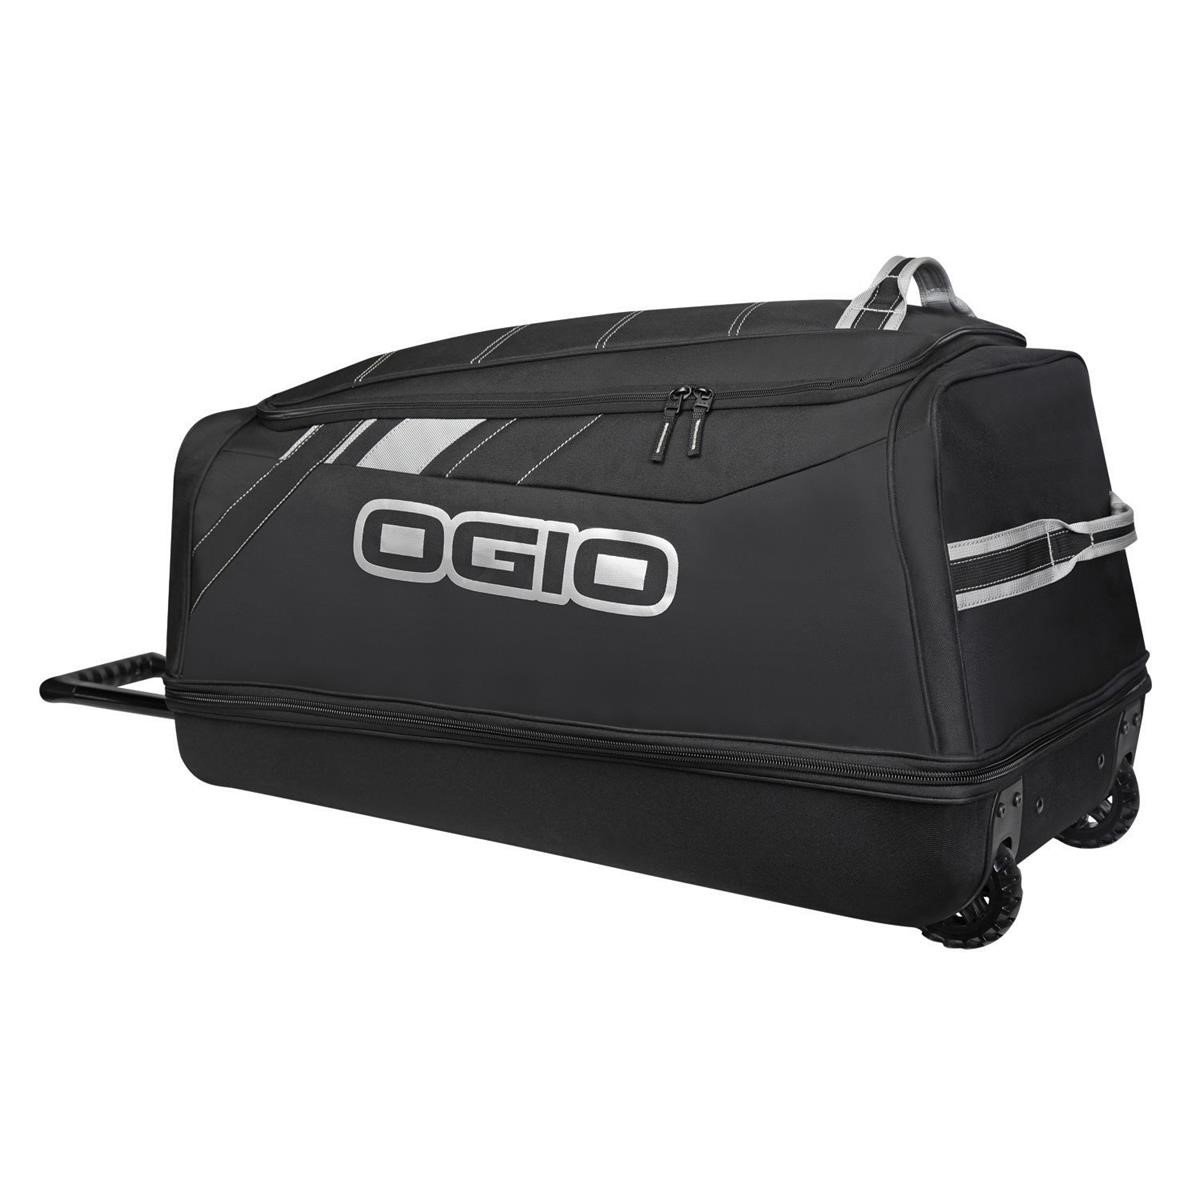 Ogio Sac de Voyage Shock Wheel Bag Stealth/Noir, 114 Litre